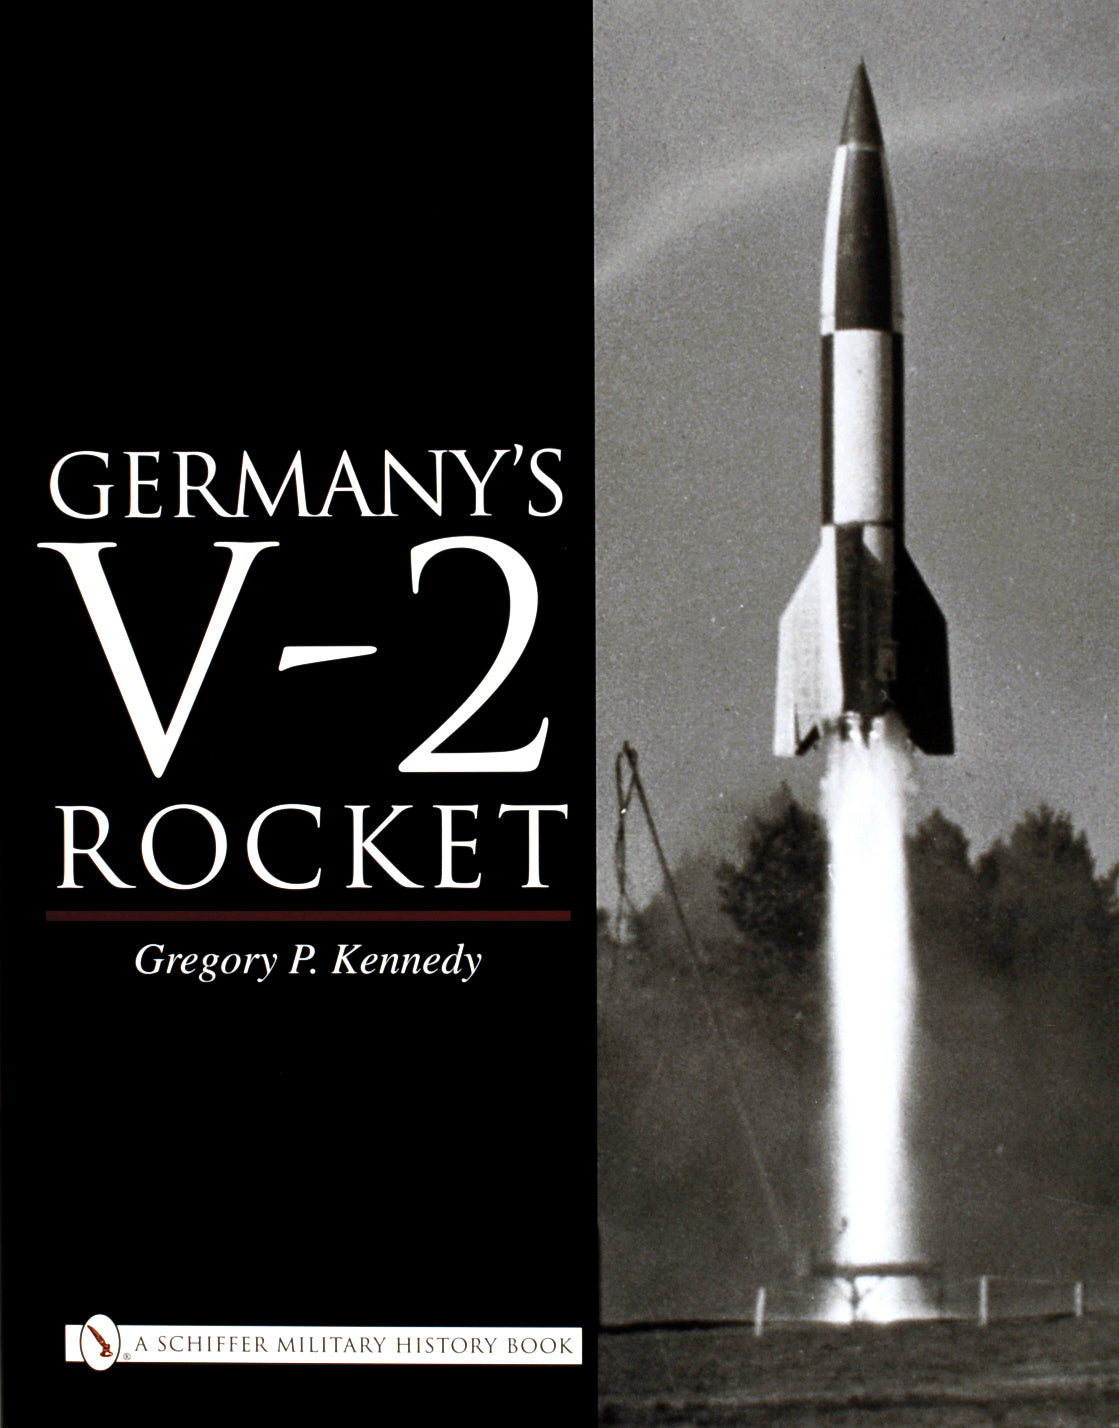 Germany's V-2 Rocket